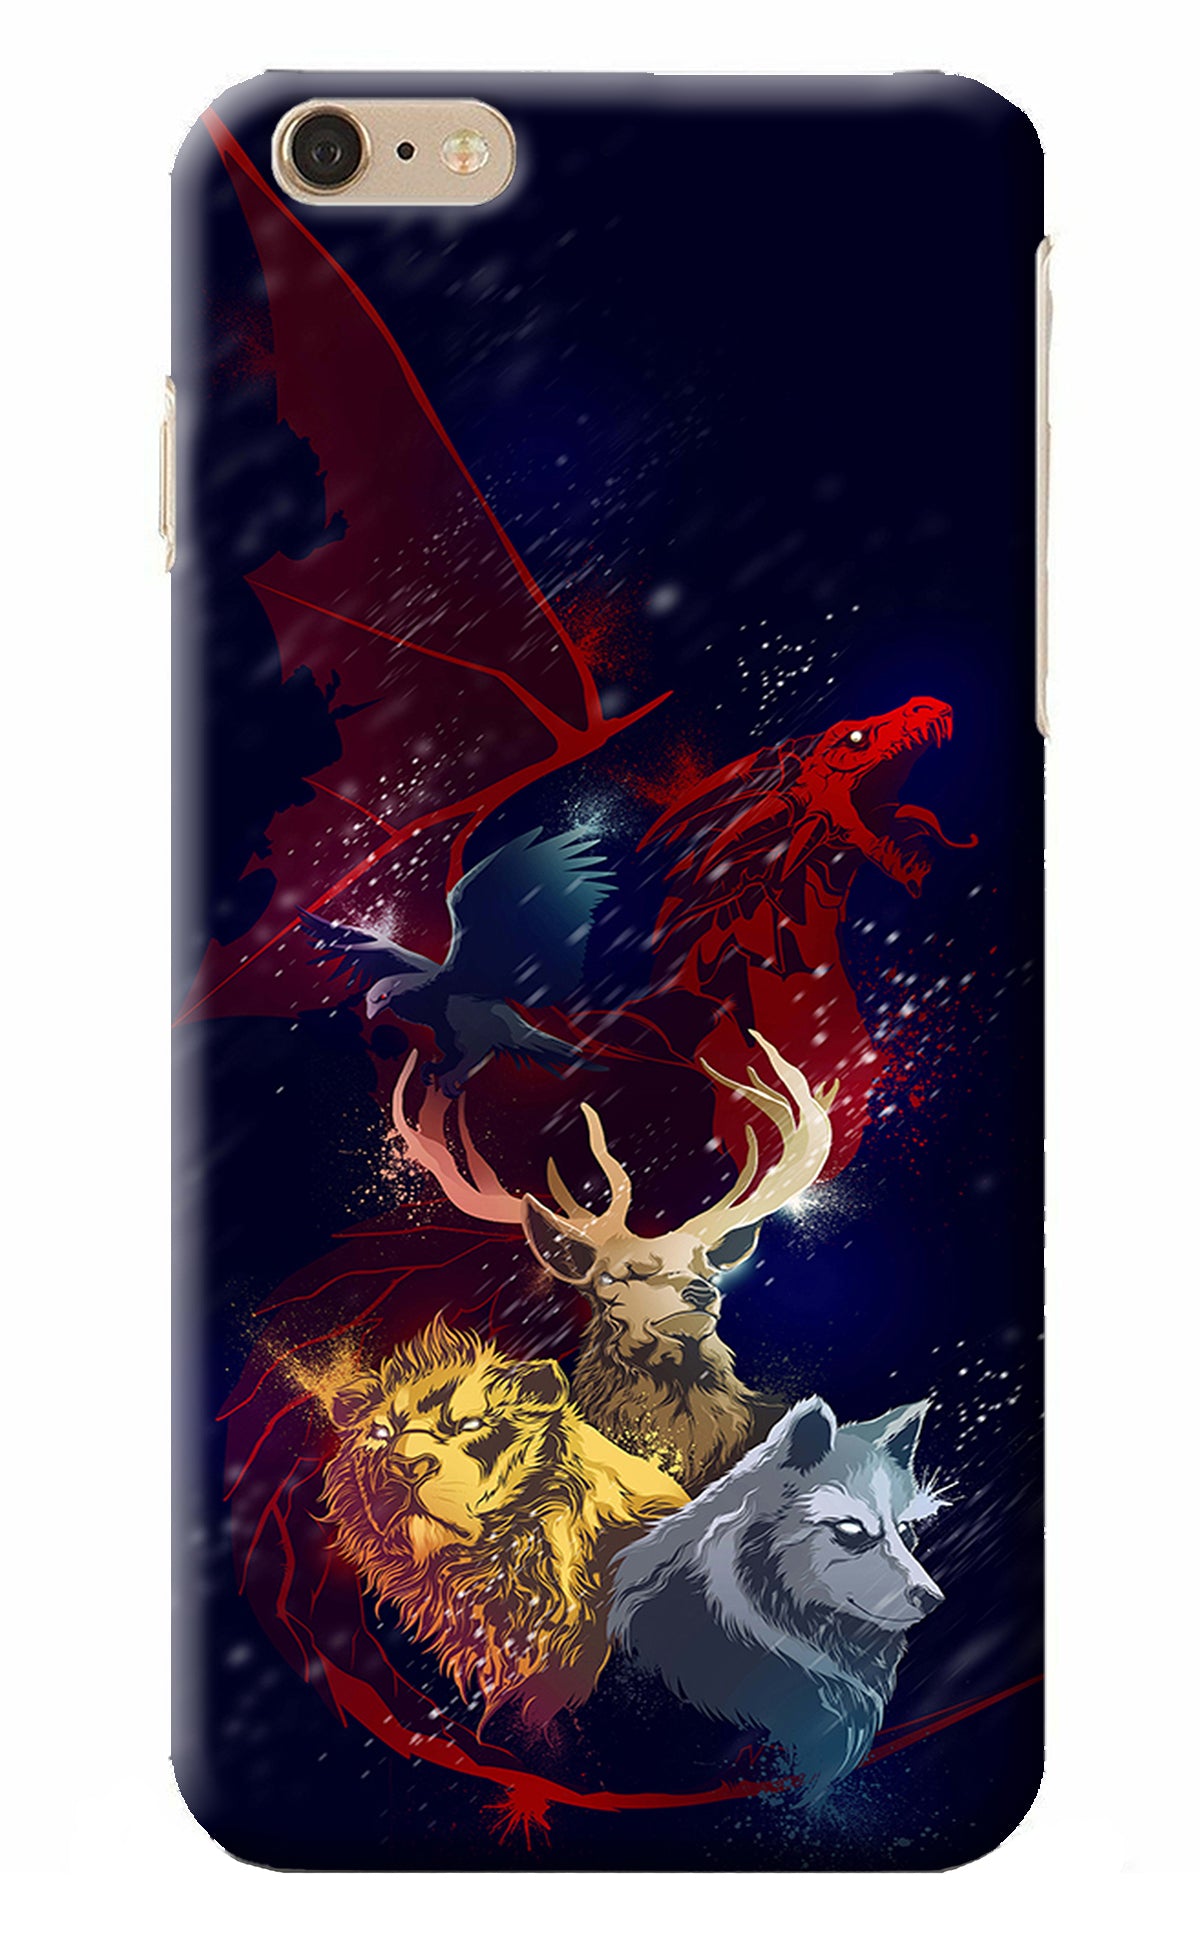 Game Of Thrones iPhone 6 Plus/6s Plus Back Cover